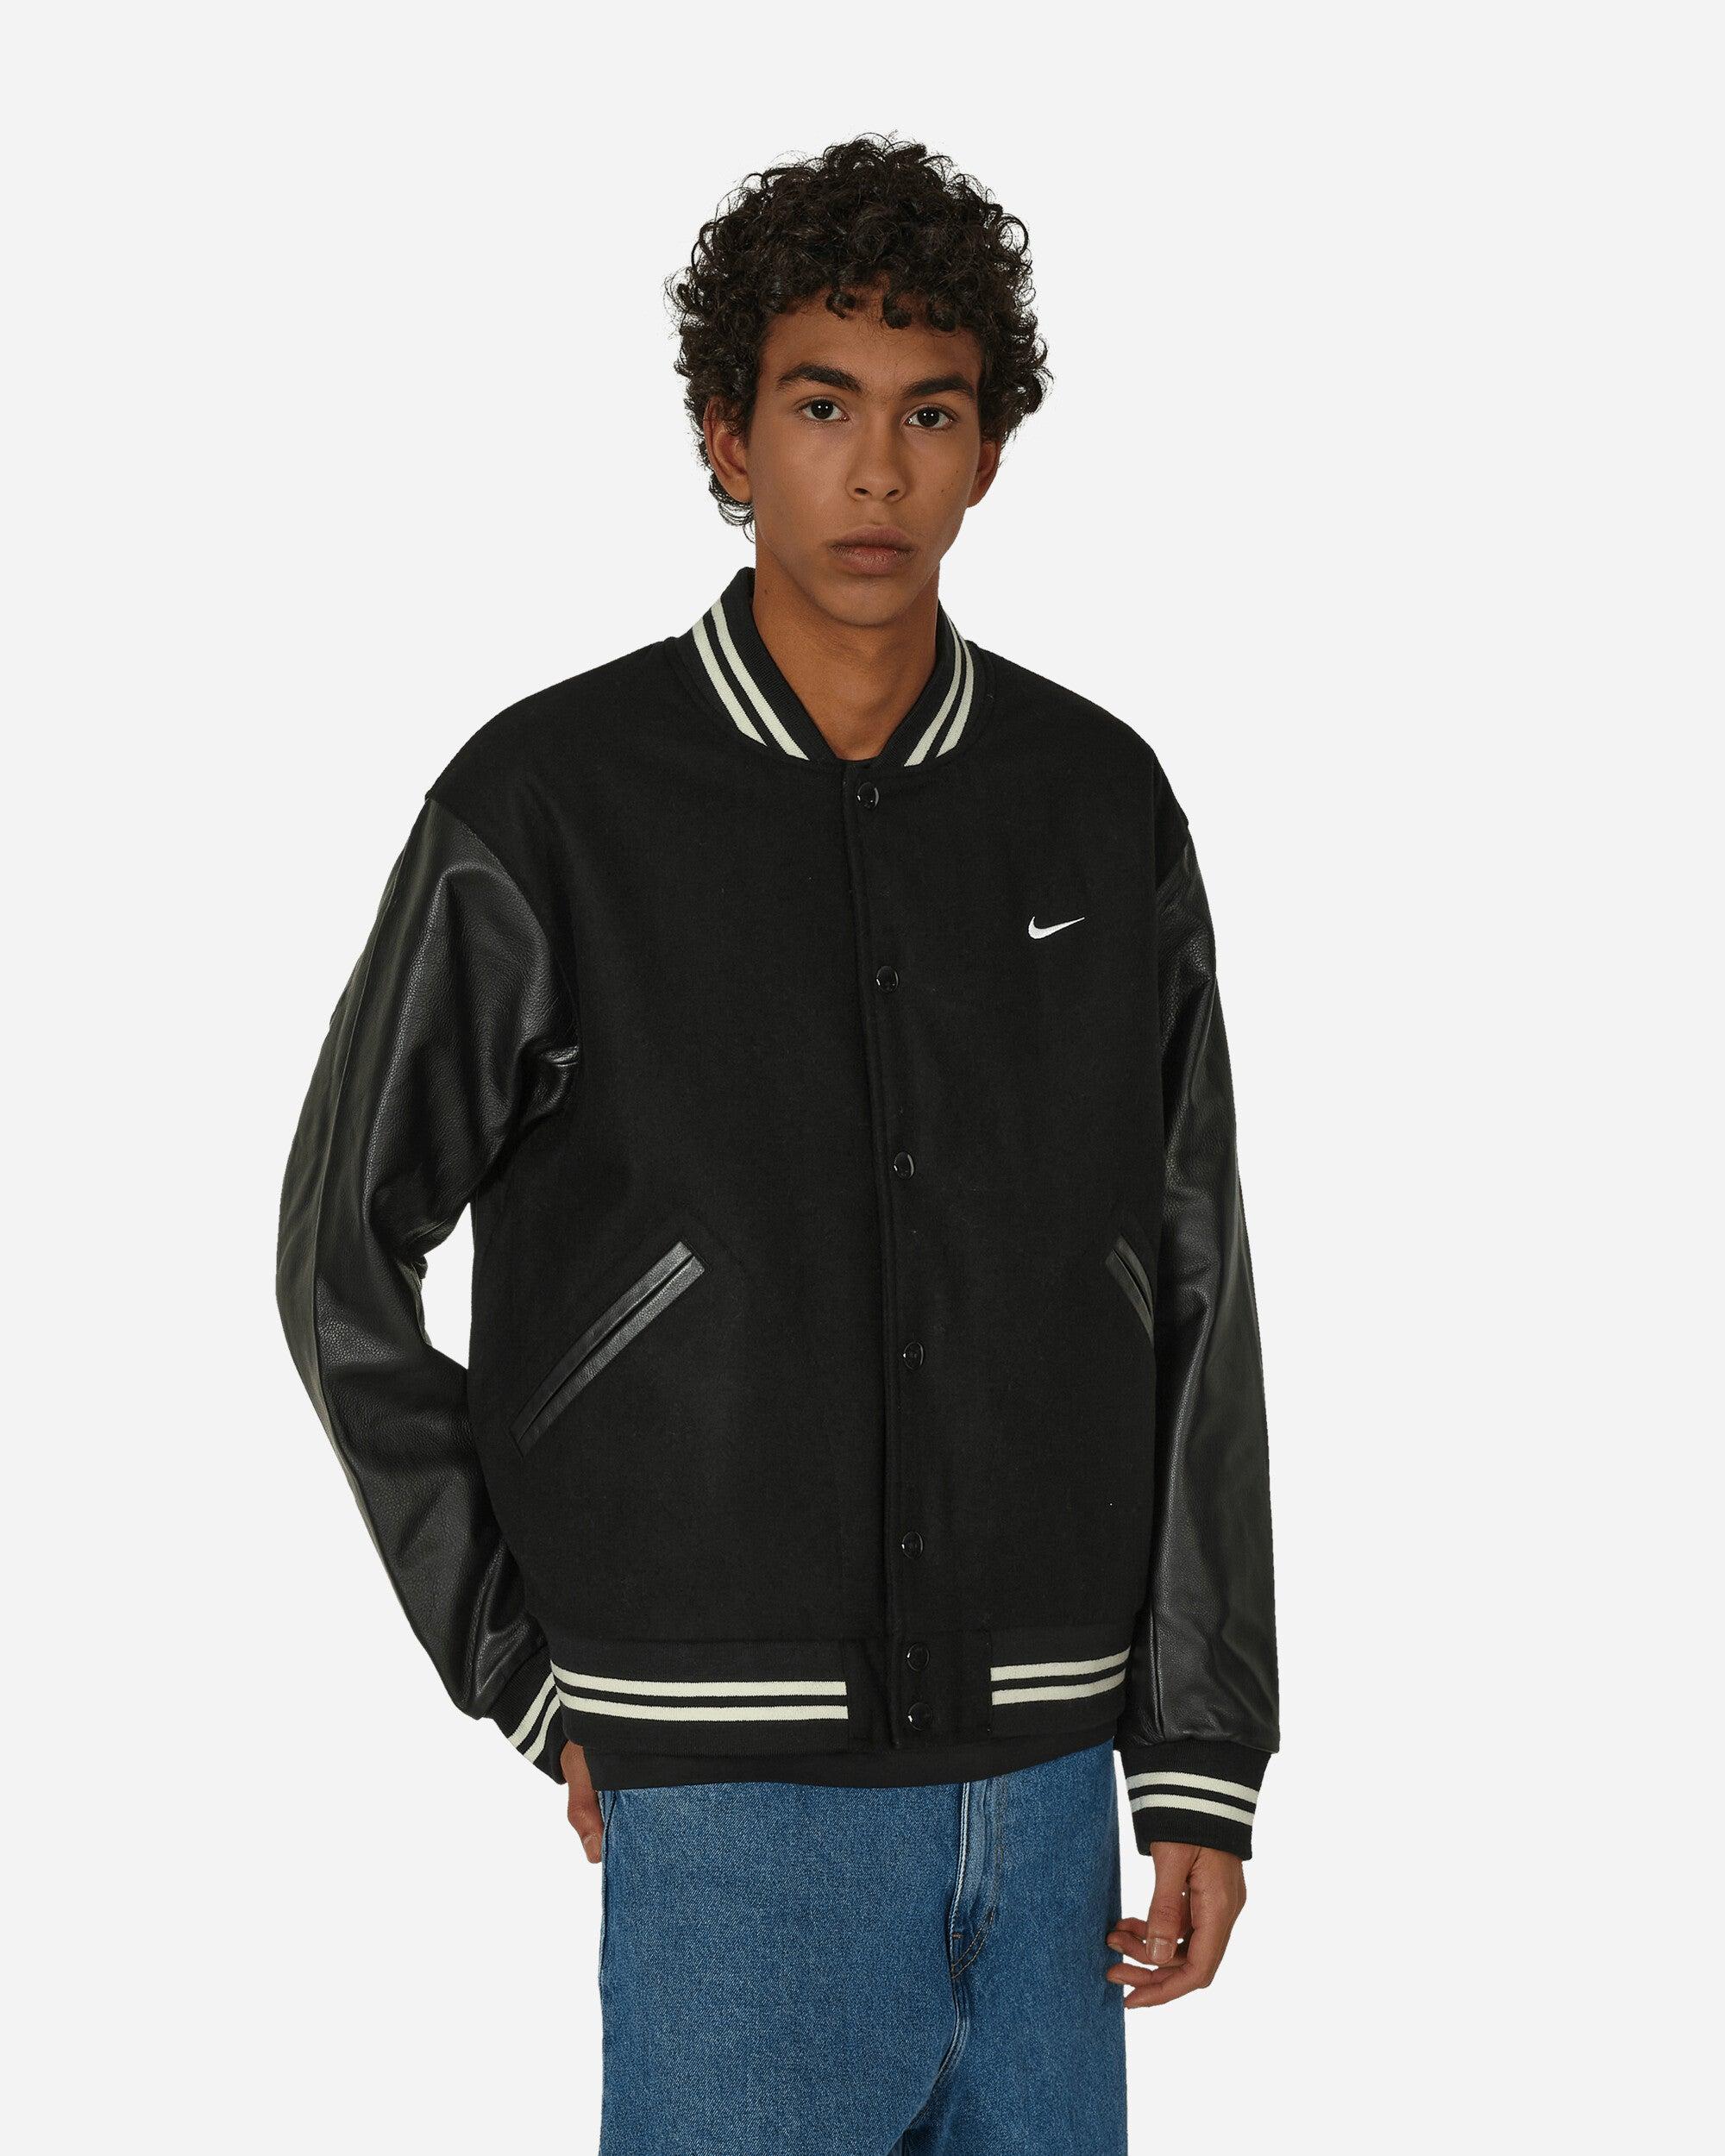 Nike Authentics Varsity Jacket Black / White for Men | Lyst